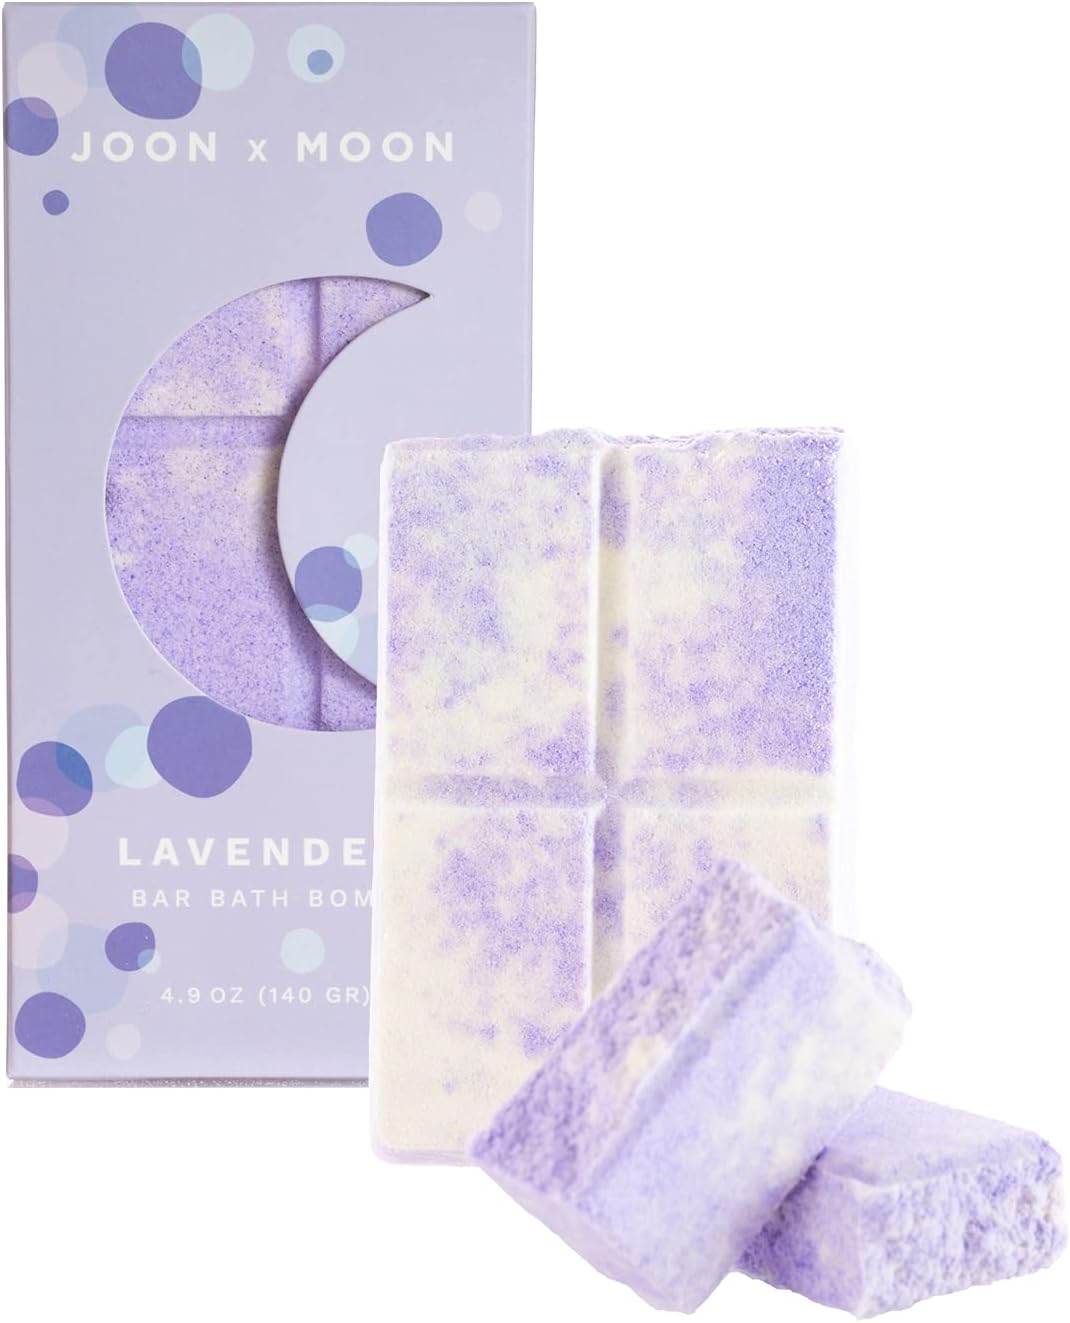 JOON X MOON Bath Bomb Bar (Lavender), Soothing Bath Soak for Relaxation and Hydrated Skin, Shea Butter & Sea Salt for a Nourishing Bubble Bath, 4.9